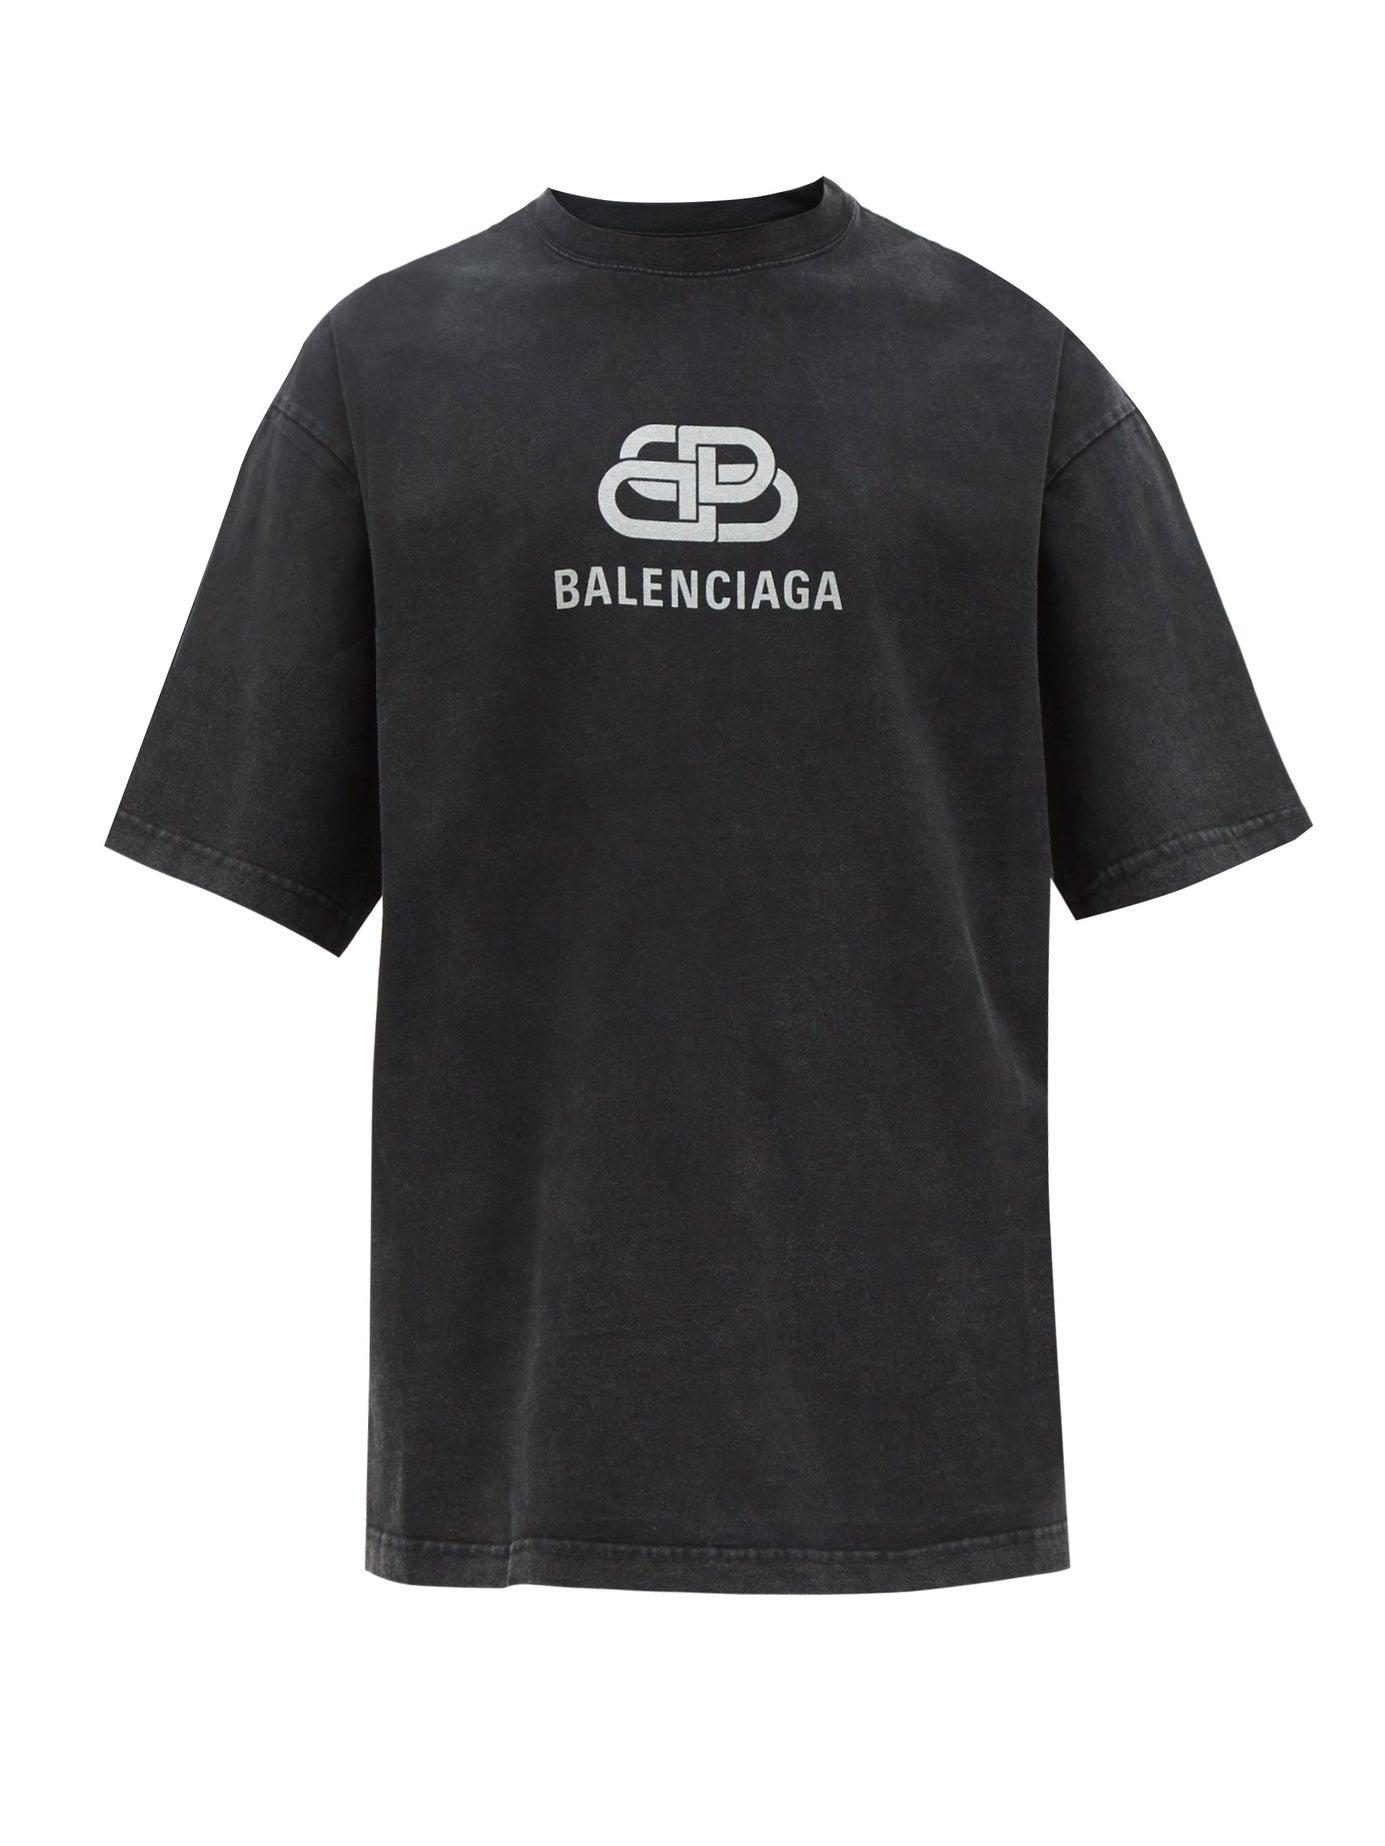 Buy > balenciaga t shirt wash tag > in stock